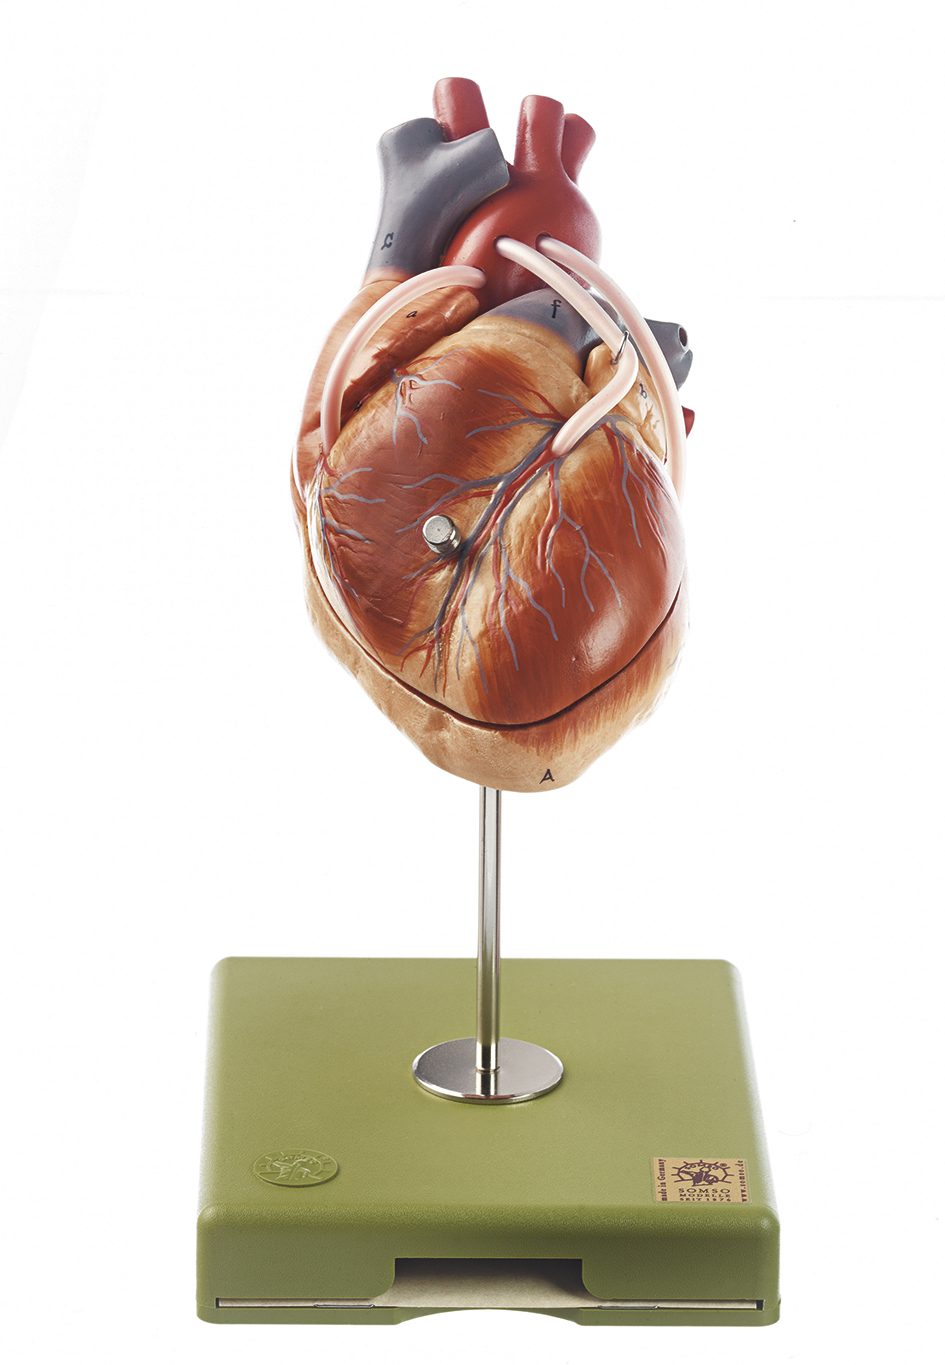 Herzmodell mit Bypassgefäßen (aortakoronarer Venenbypass), Bestellnummer HS 15/1